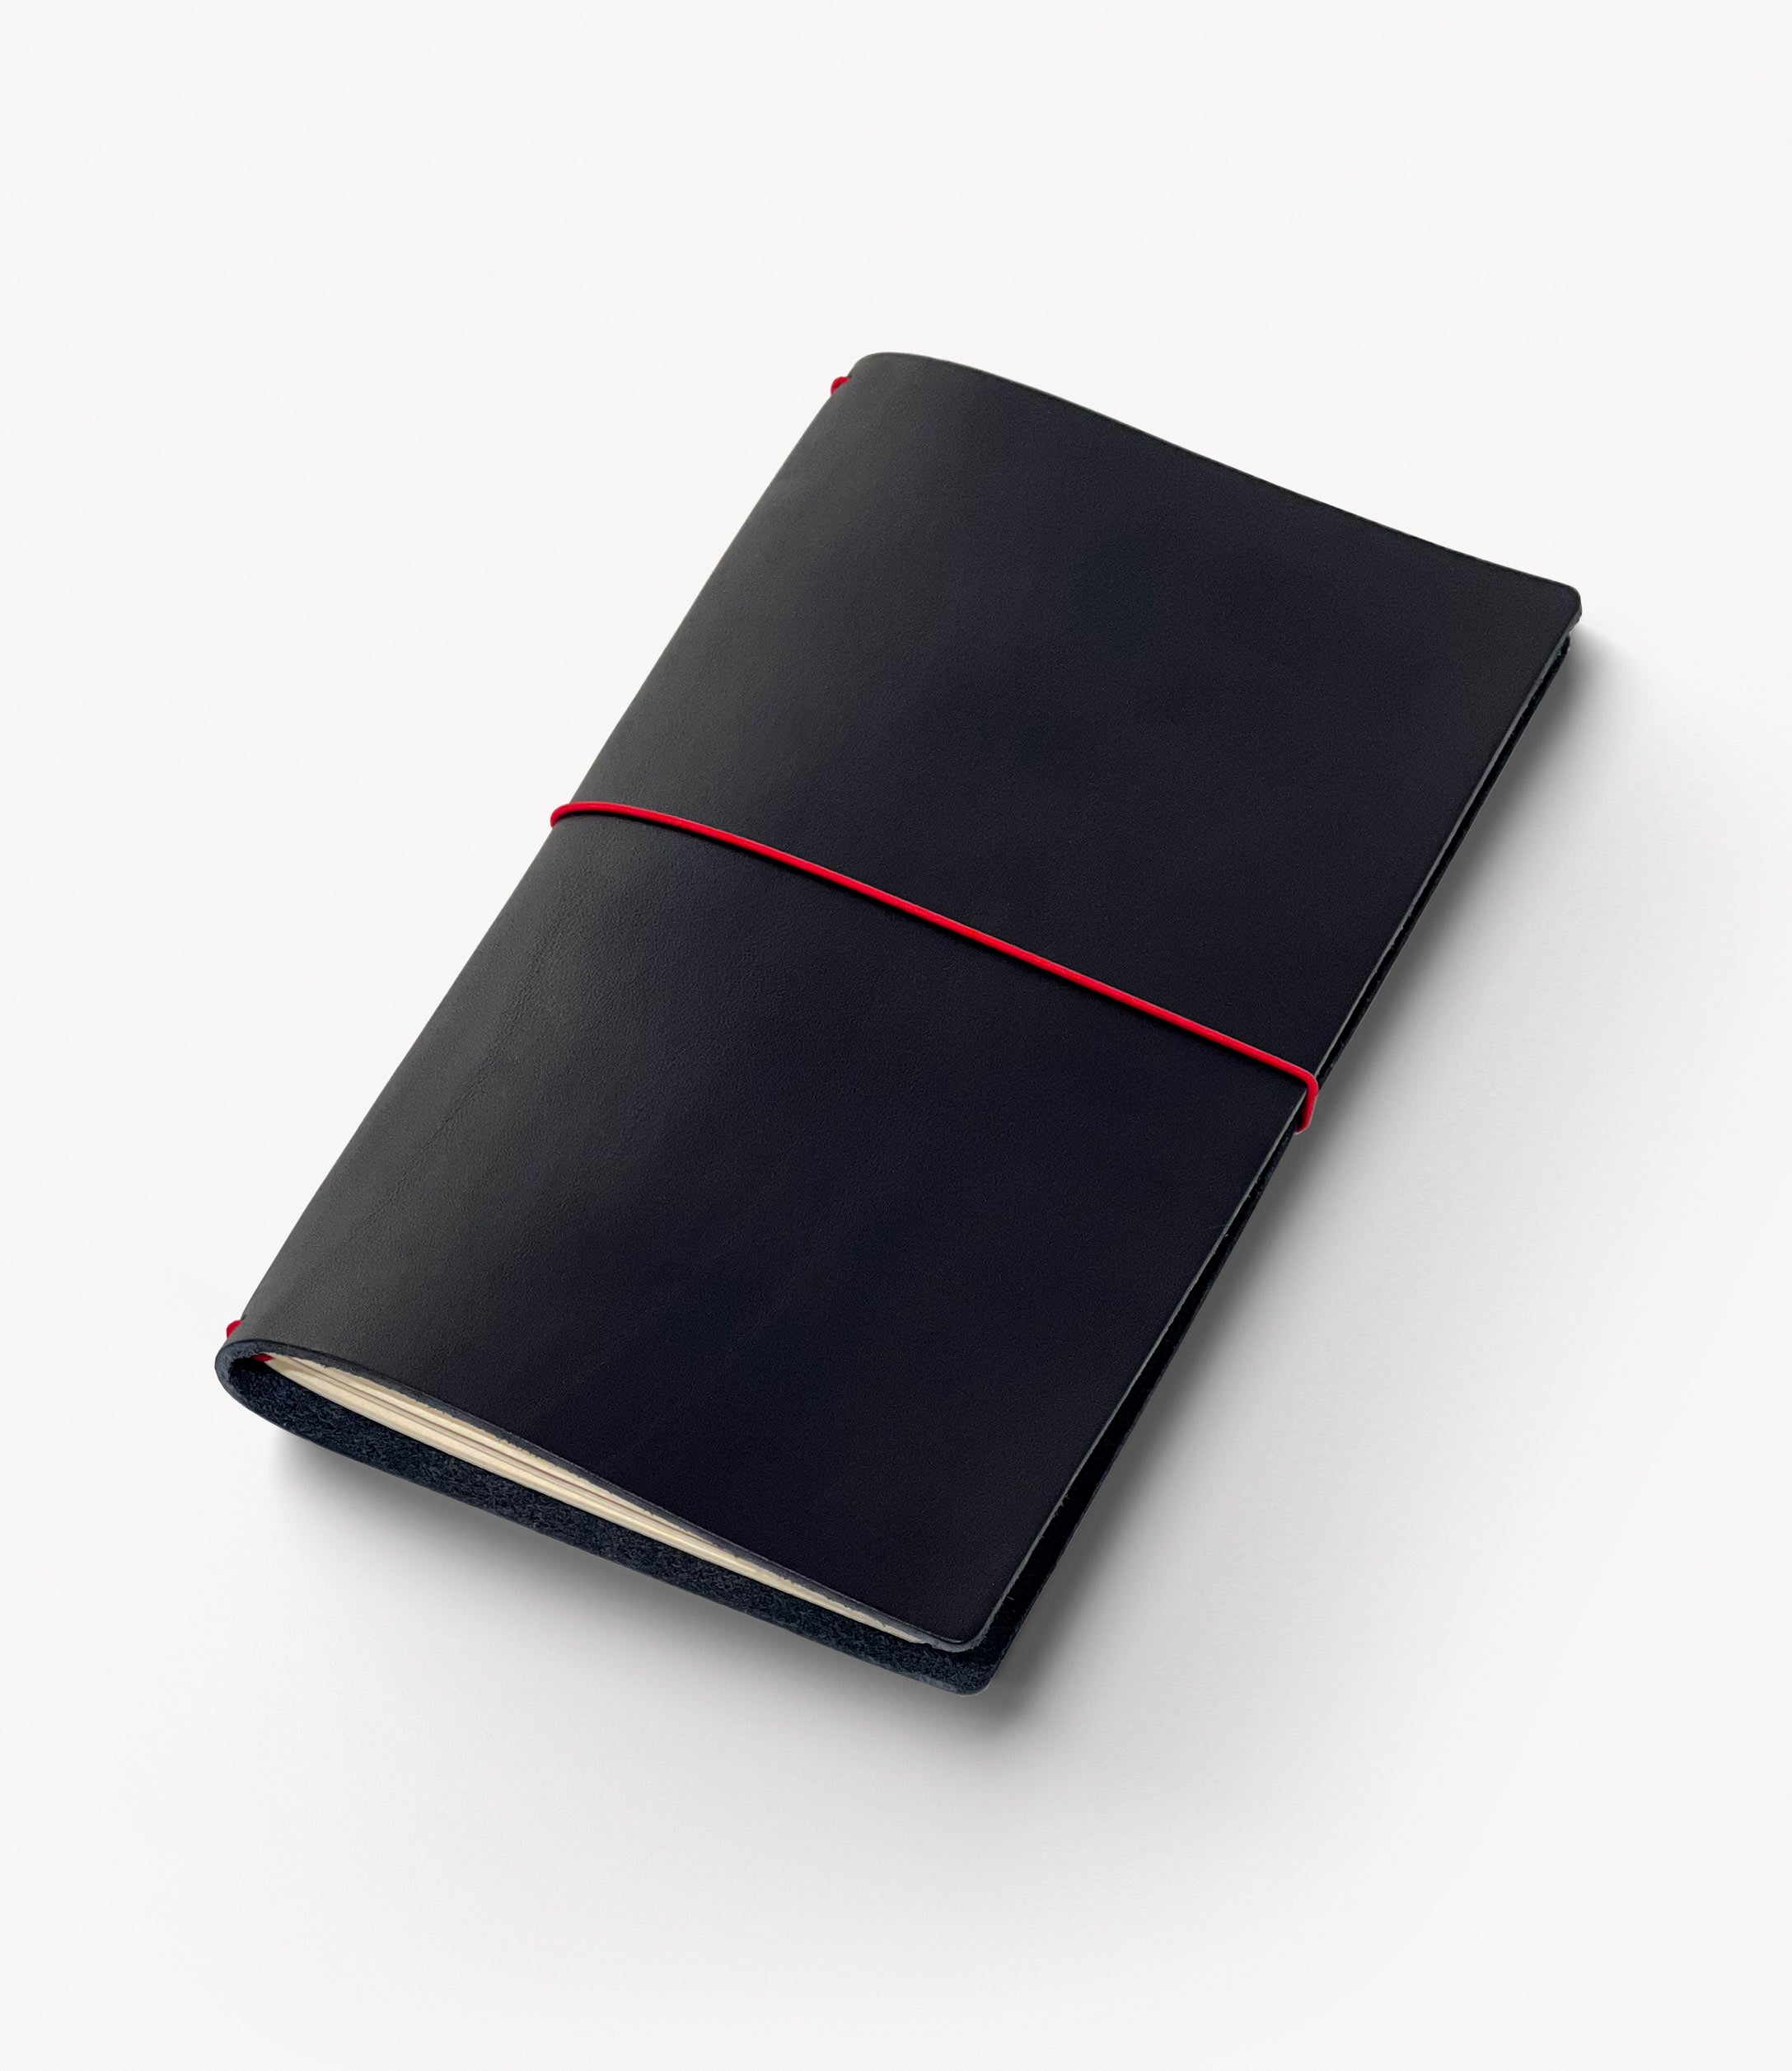 Acrobat Leather Notebook Cover. Slim size. Black color